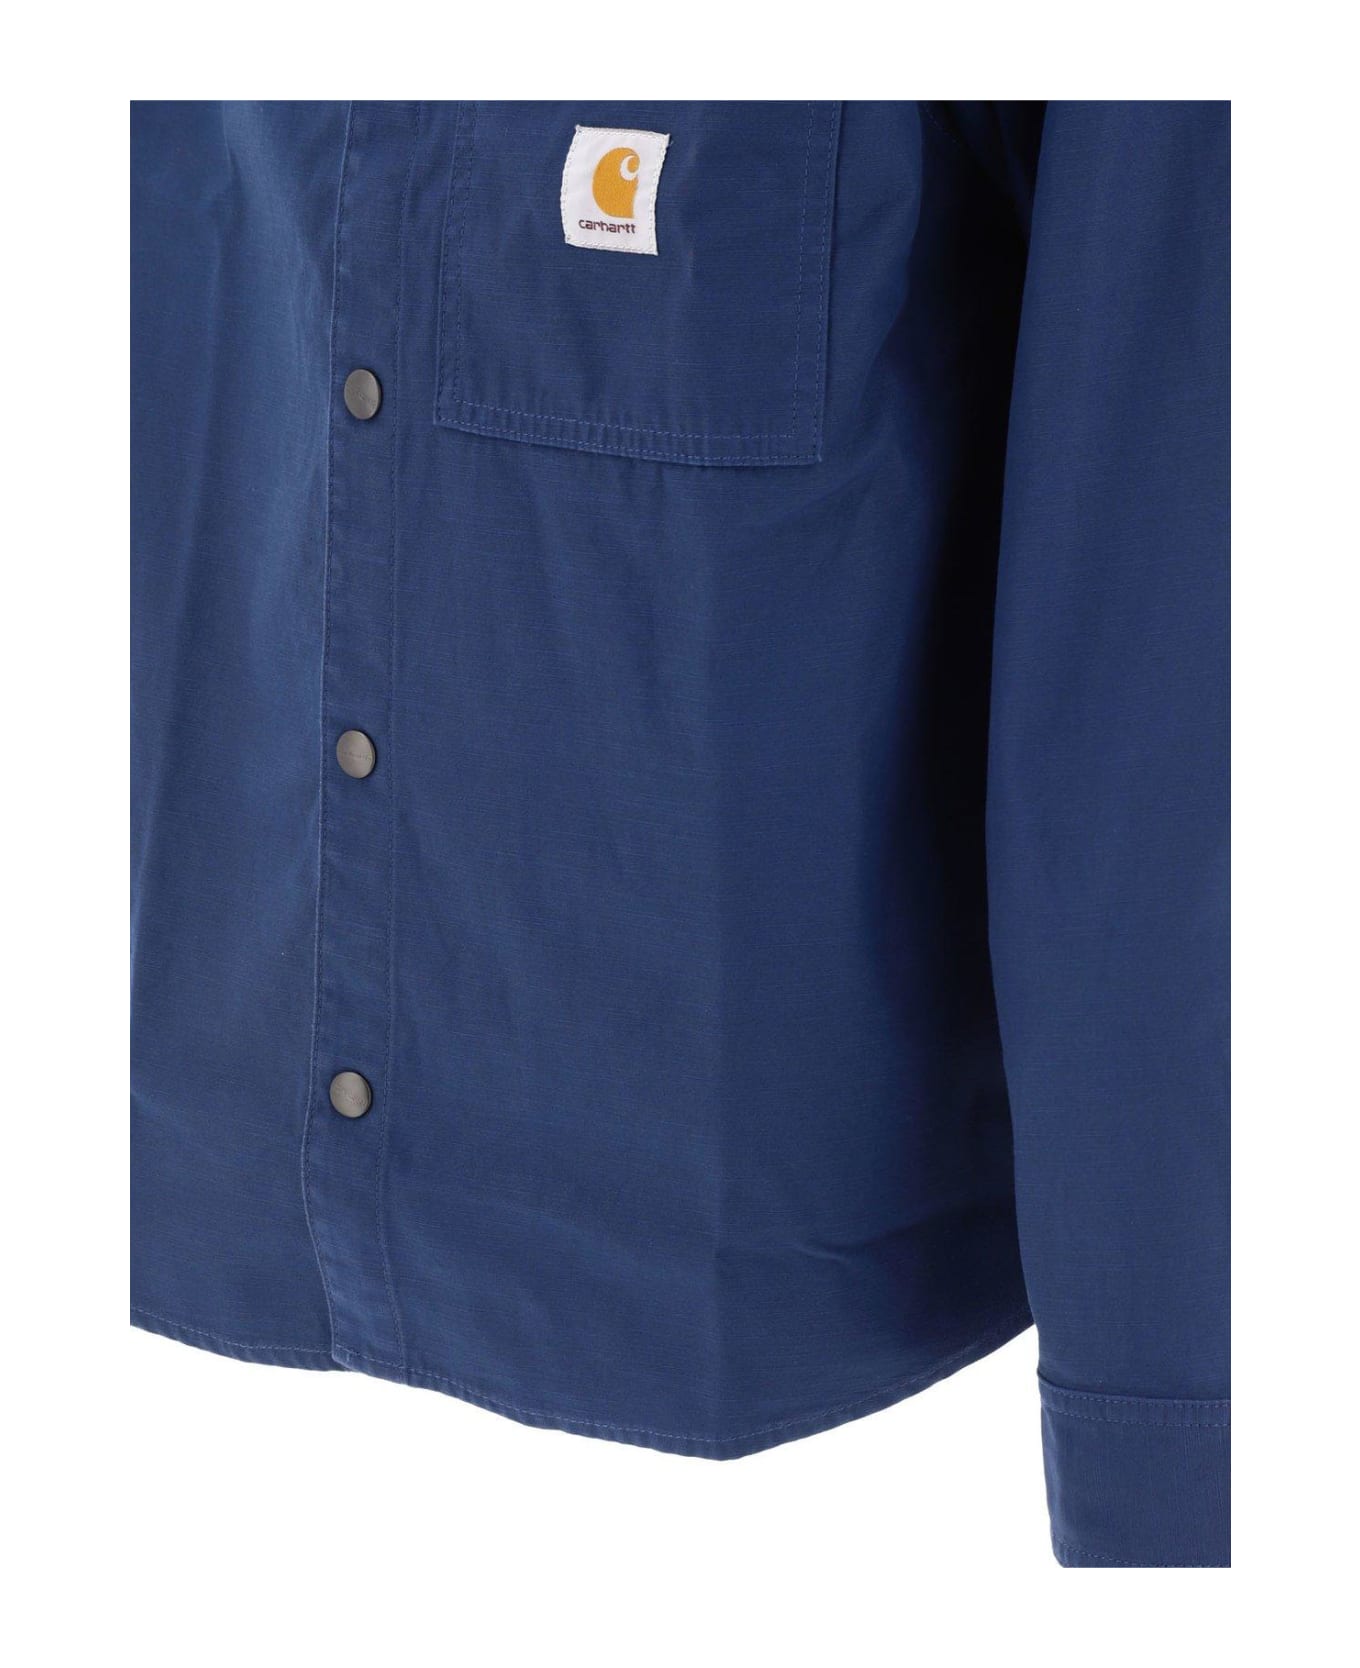 Carhartt Hayworth Shirt Jacket - NAVAL RINSED